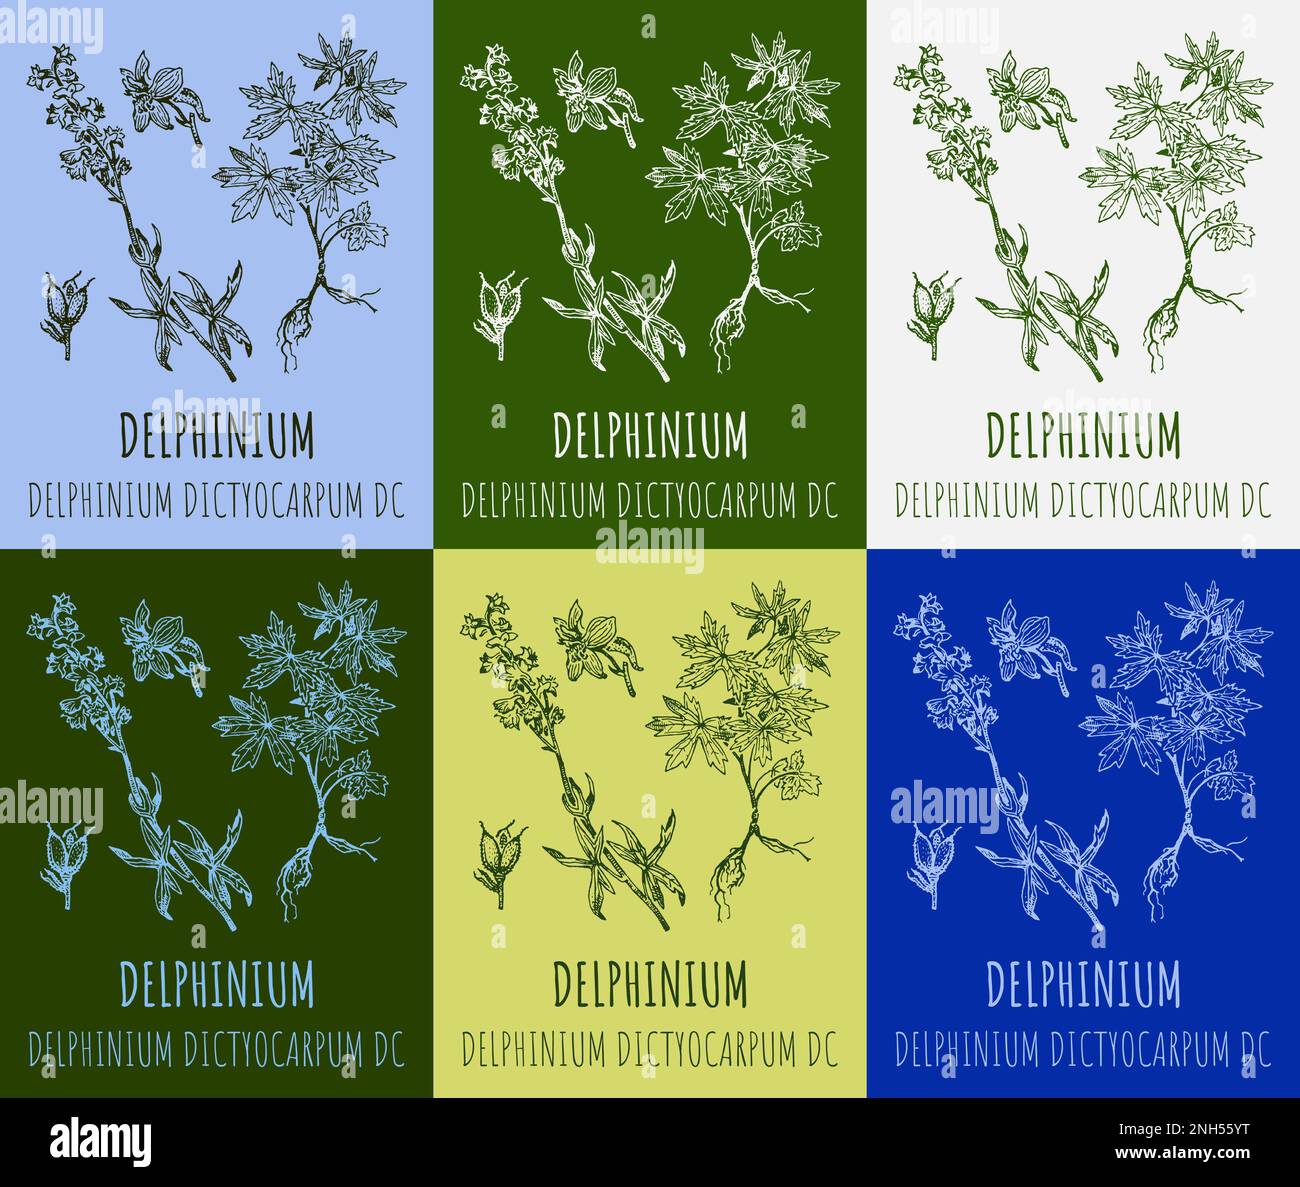 Set of vector drawings Delphinium in different colors. Hand drawn illustration. Latin name Delphinium dictyocarpum. Stock Photo